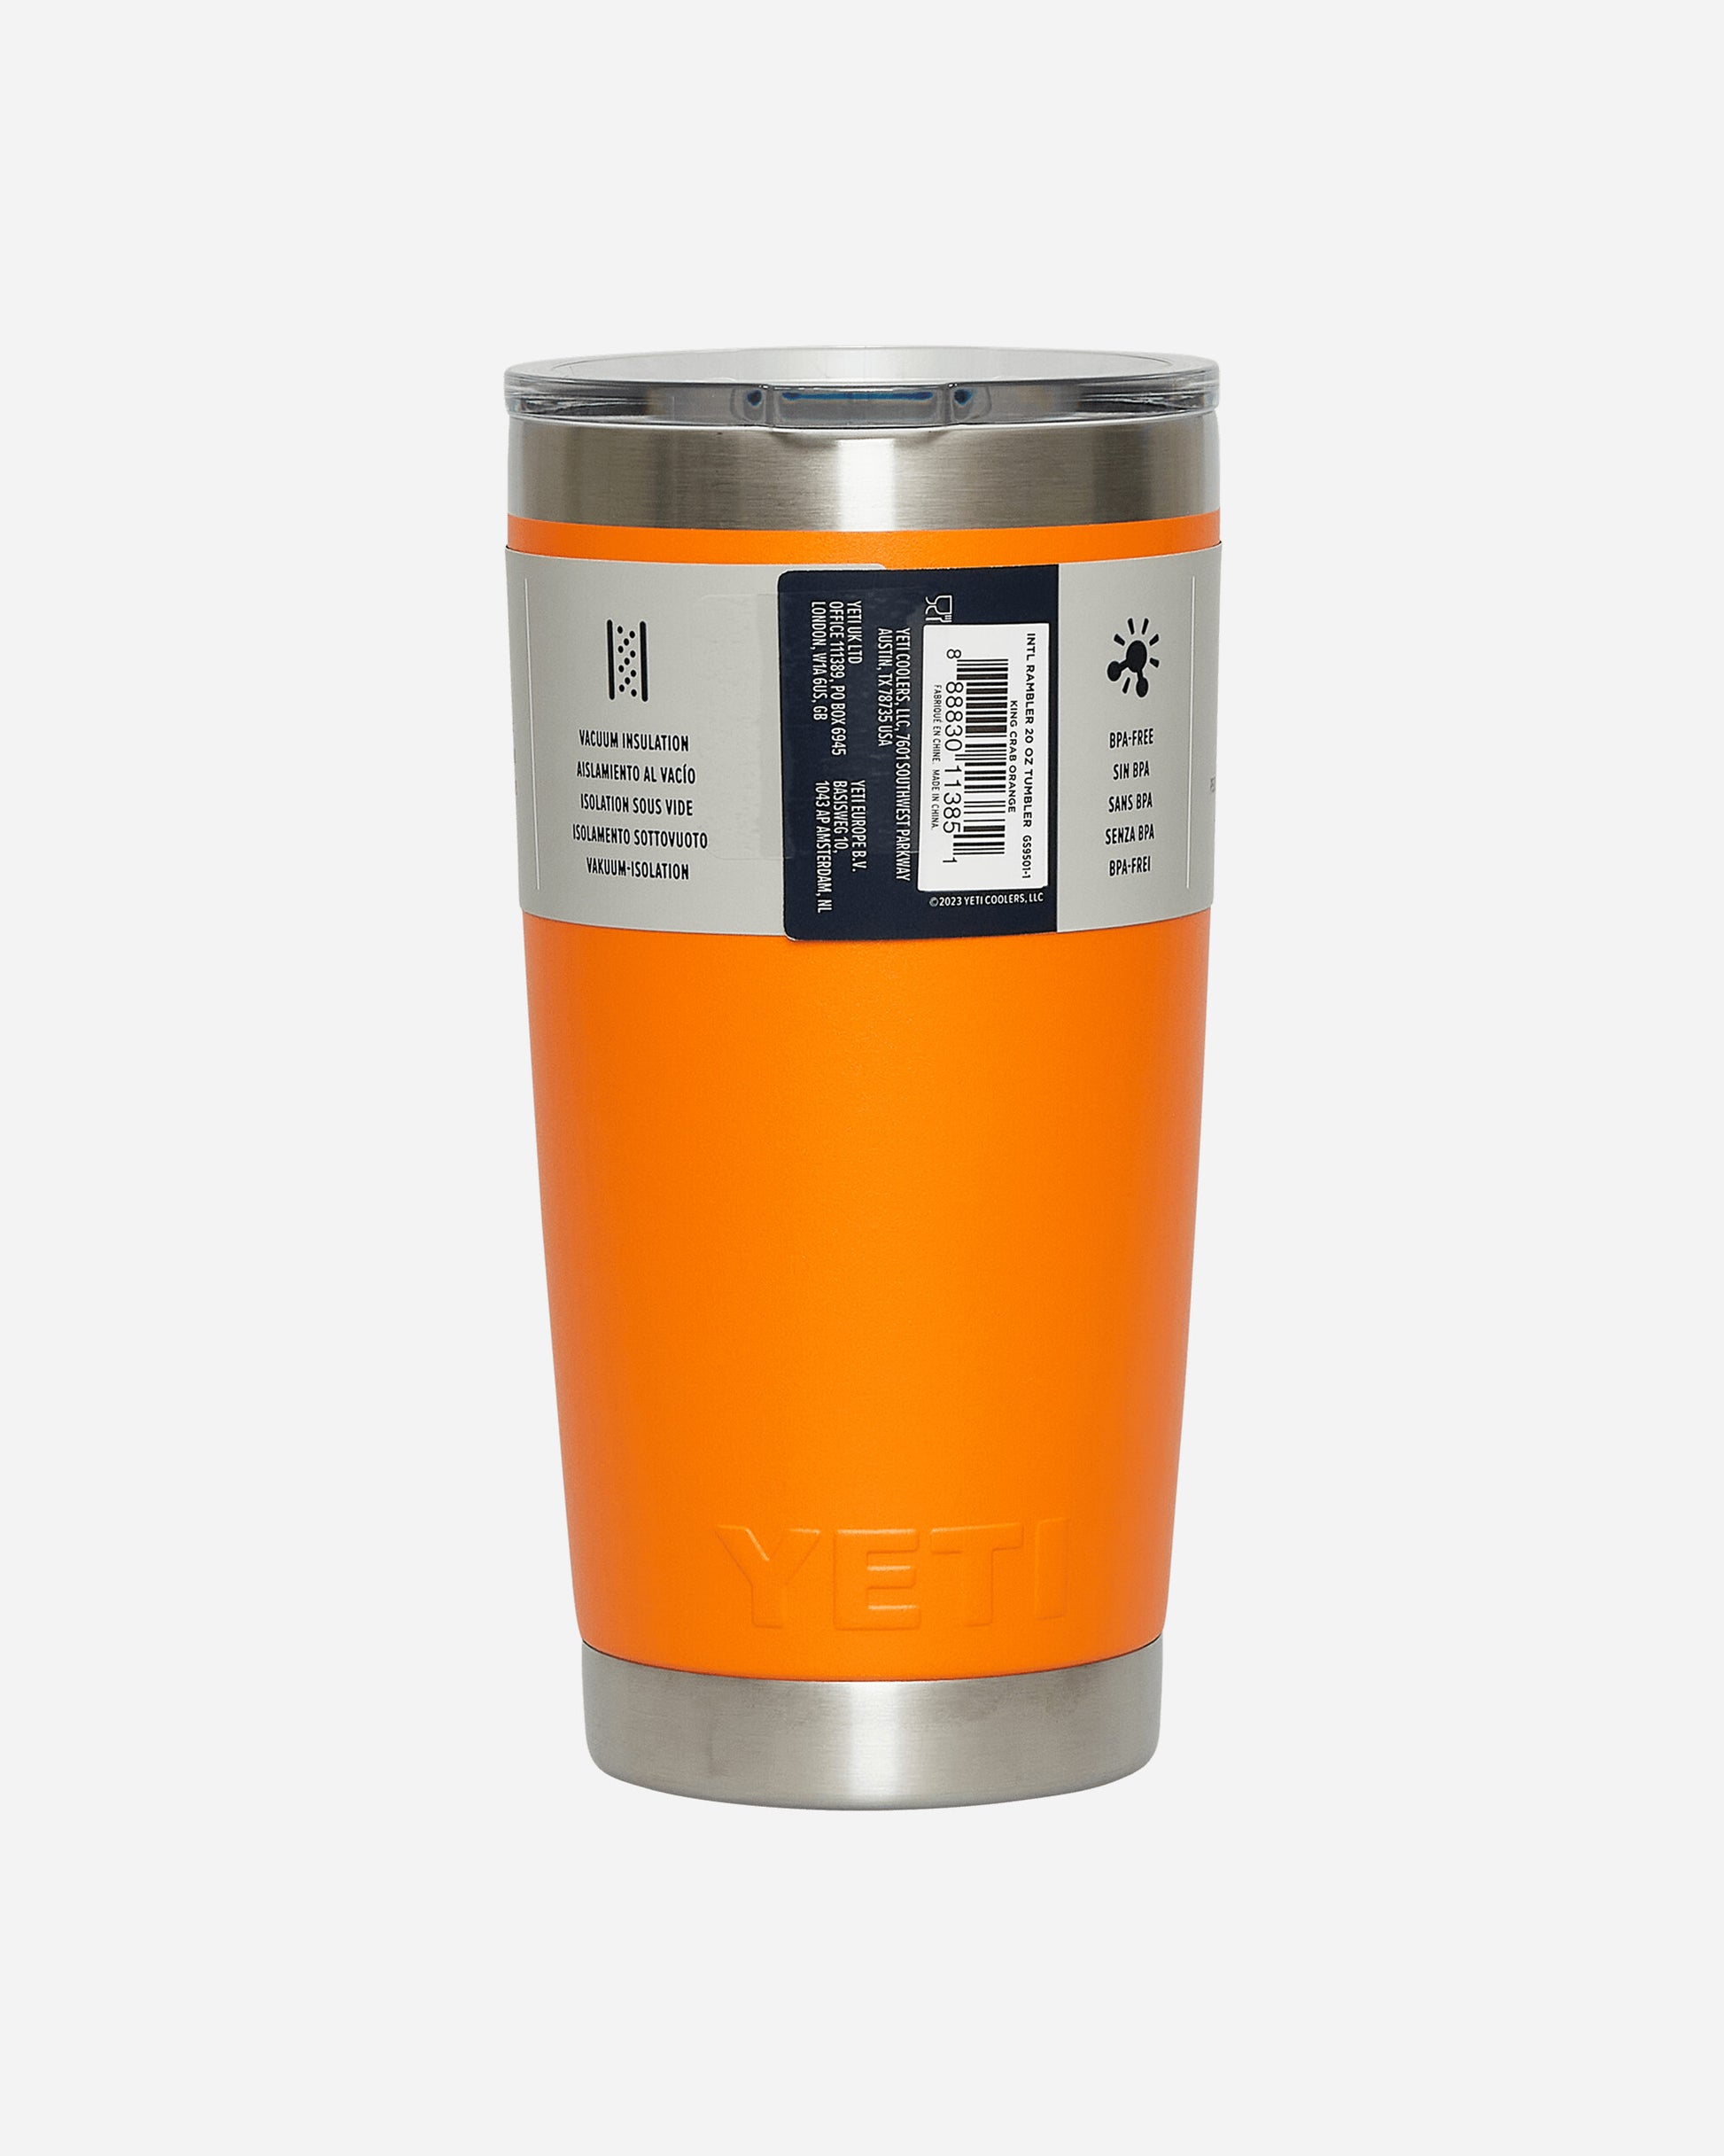 YETI Rambler 20oz Stackable Cup King Crab Orange Equipment Bottles and Bowls 0305 KCO